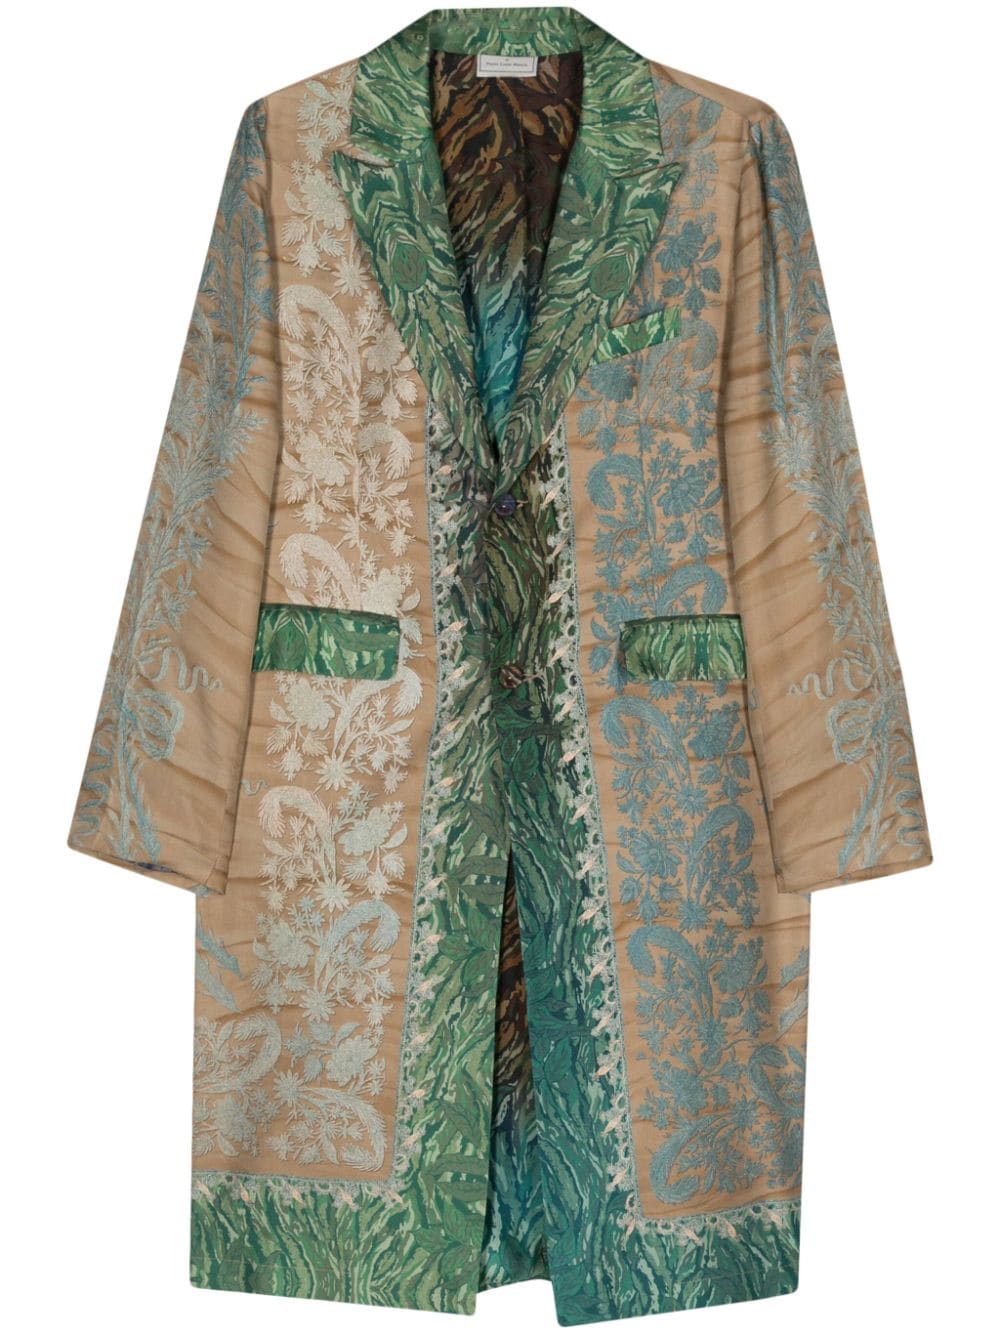 PIERRE LOUIS MASCIA Green Floral Print Silk Jacket for Women